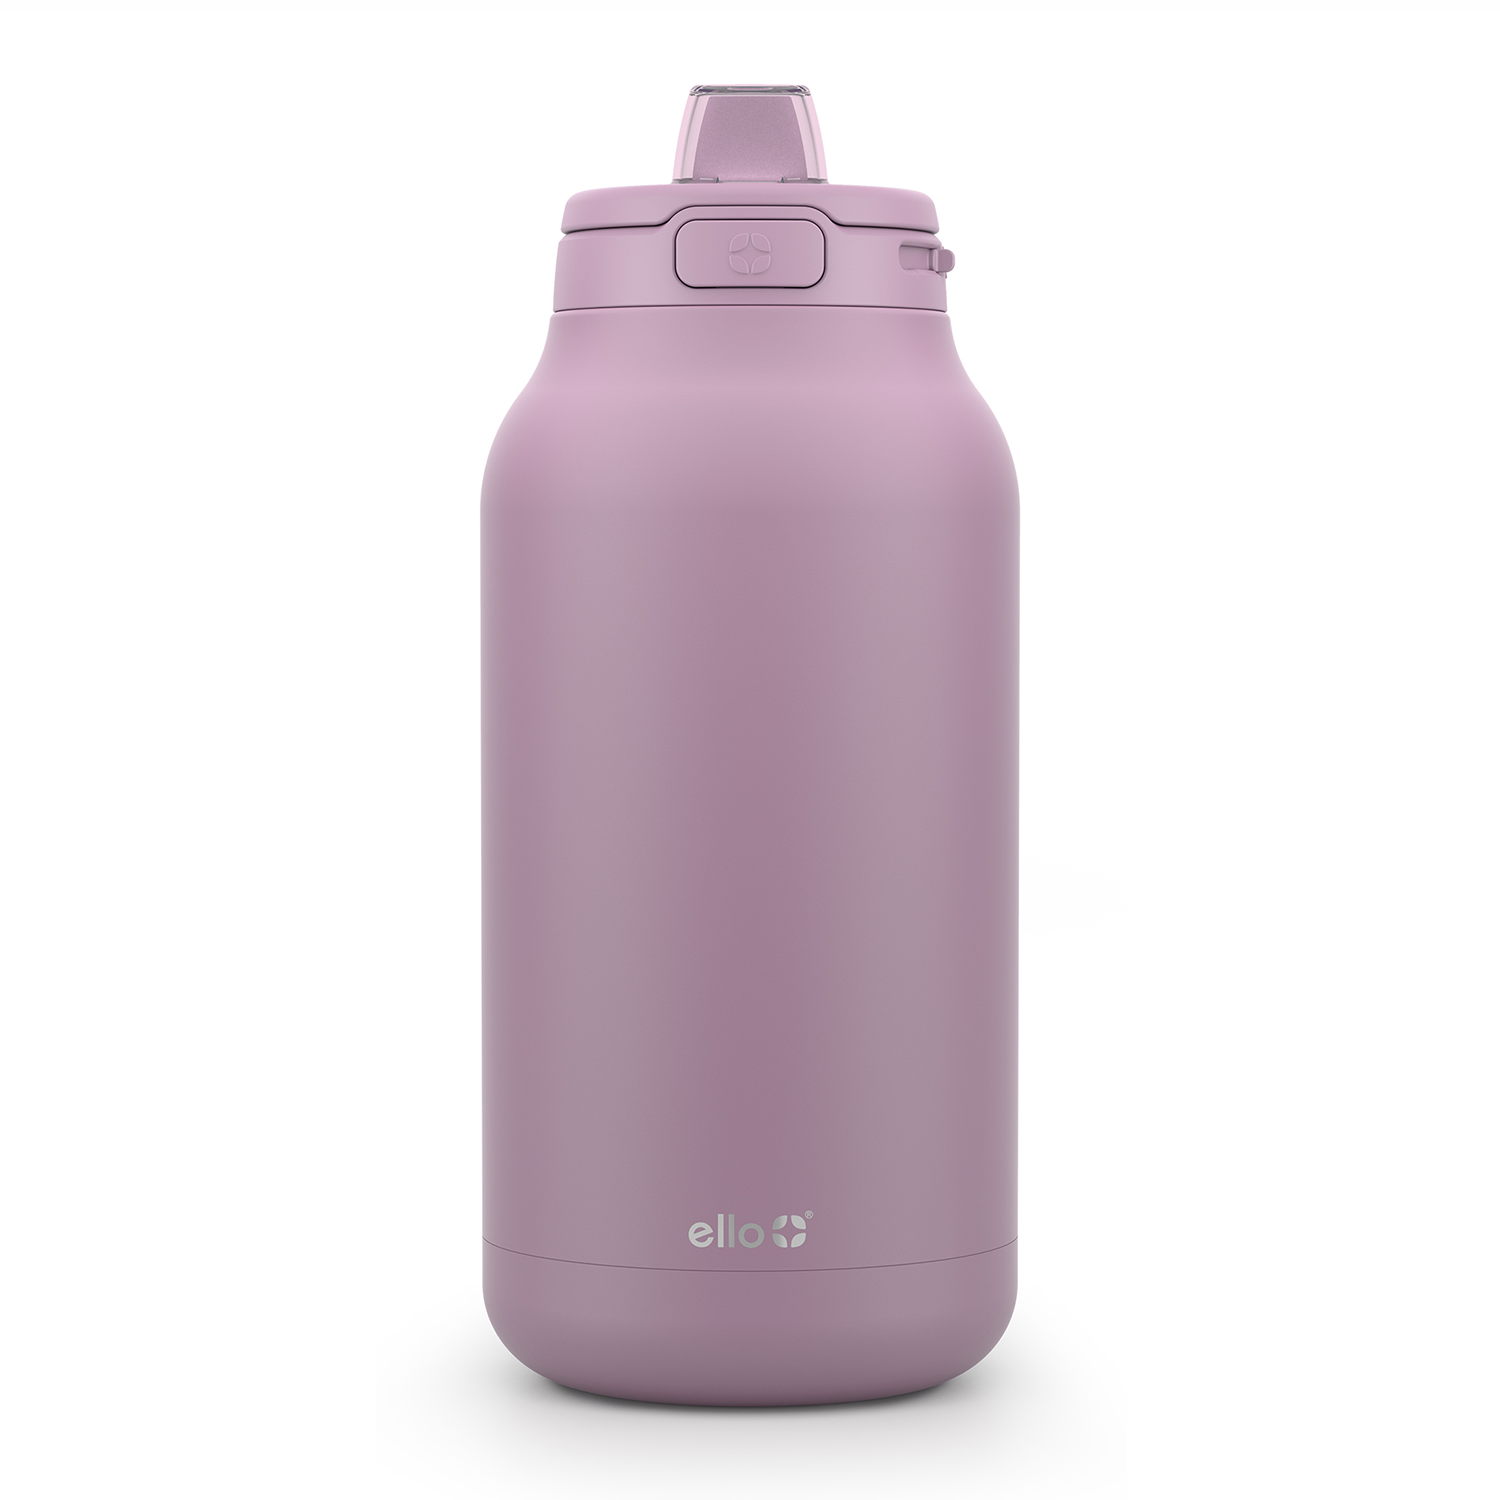 Hydro Peak 32 oz. Water Bottle Pink! /WITH A SCREW LID